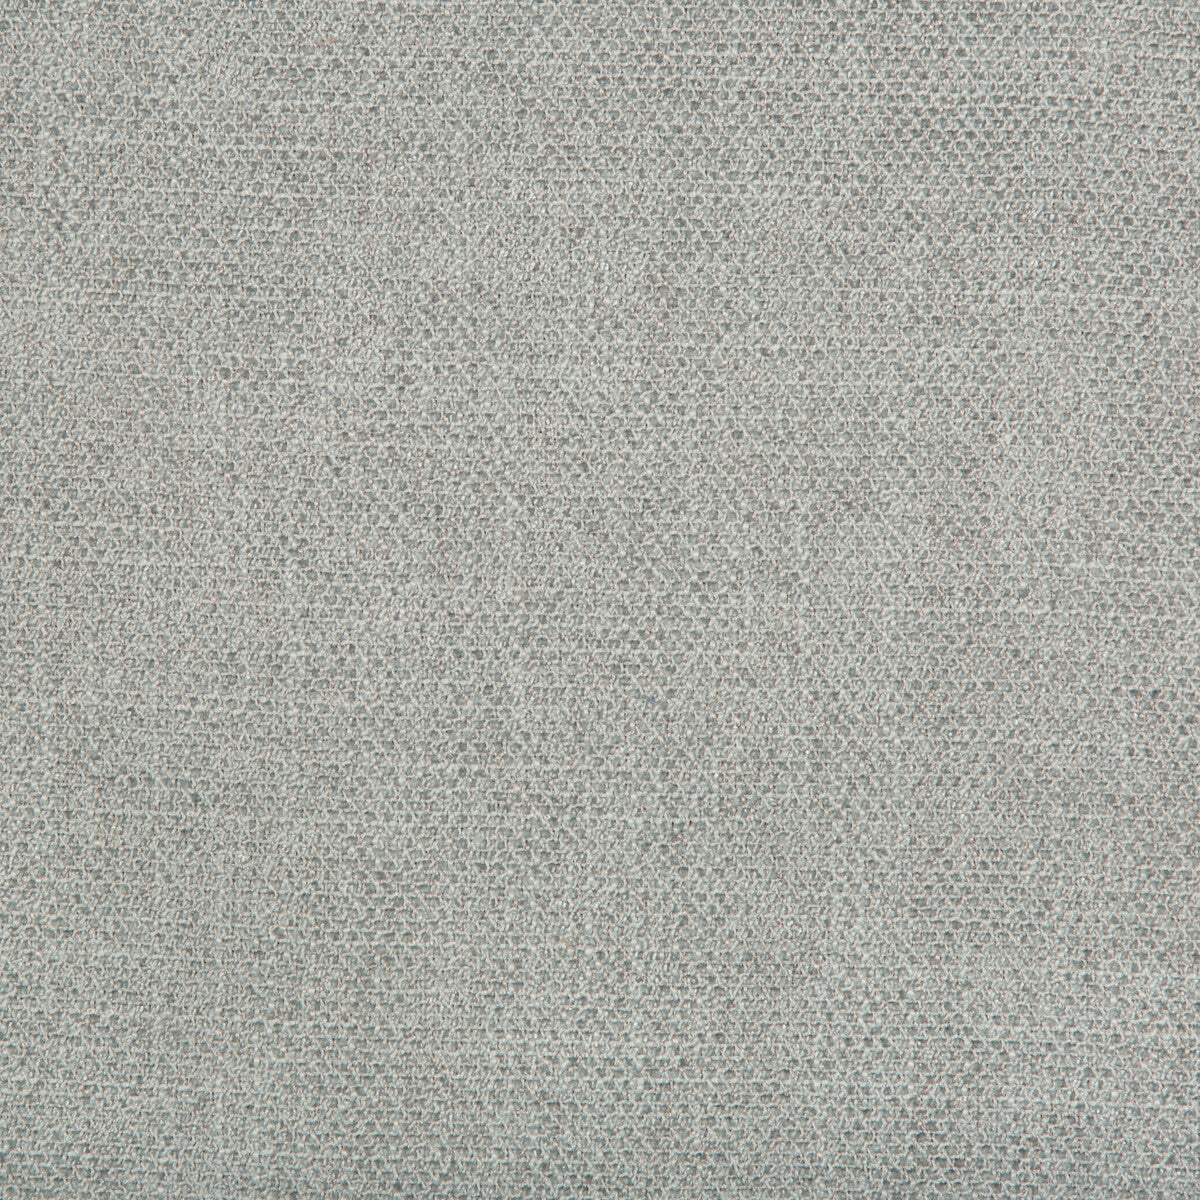 Kf Smt fabric - pattern 35060.1115.0 - by Kravet Smart in the Performance Kravetarmor collection